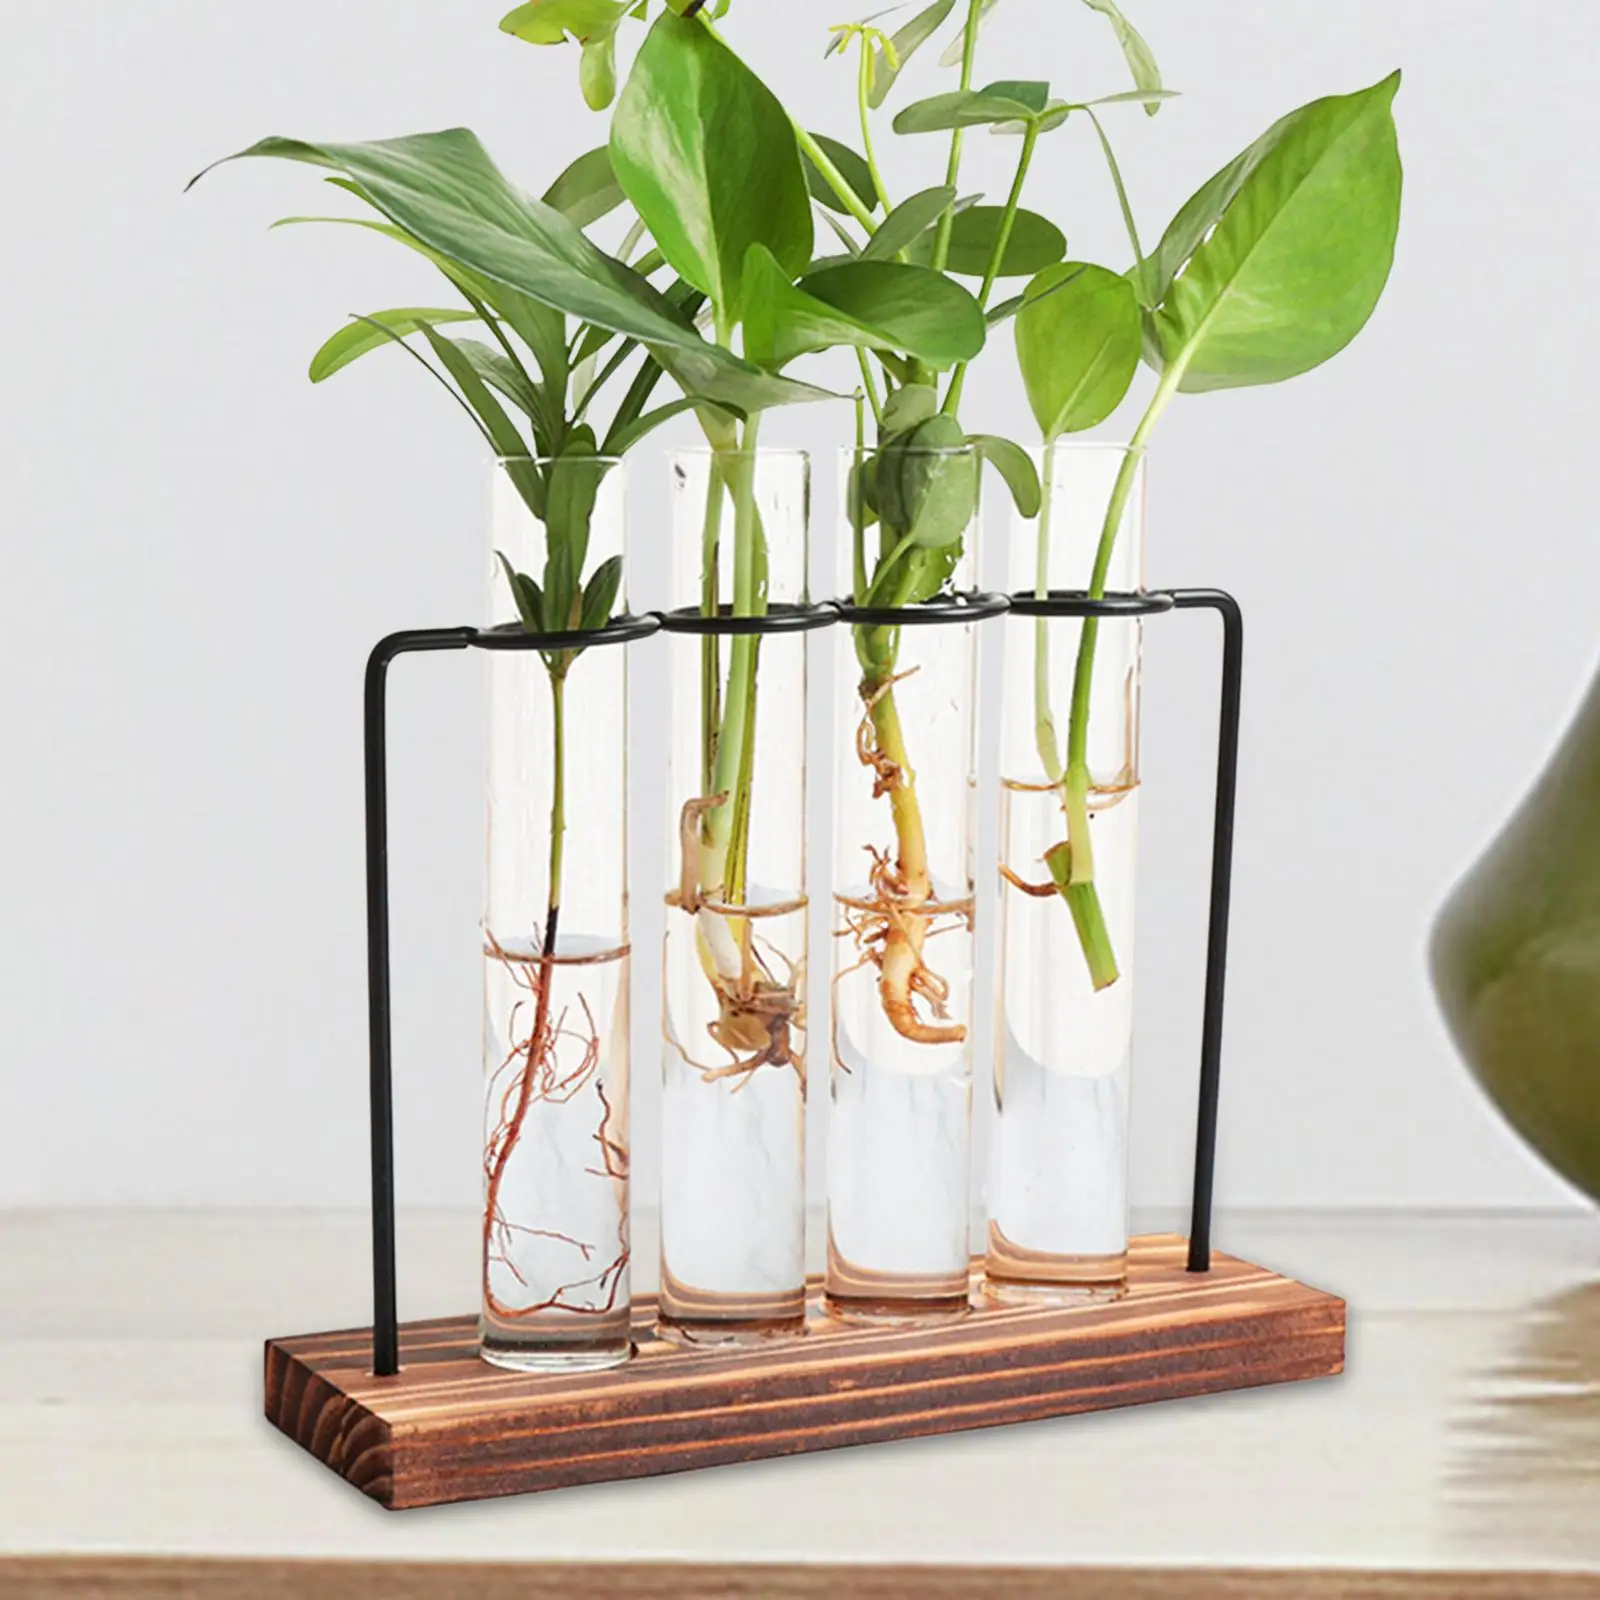 Test Tube Vase for Flowers with Stand Plant Vase Flower Arrangement Clear Planter for Bedroom Office Desk Tabletop Home Decor